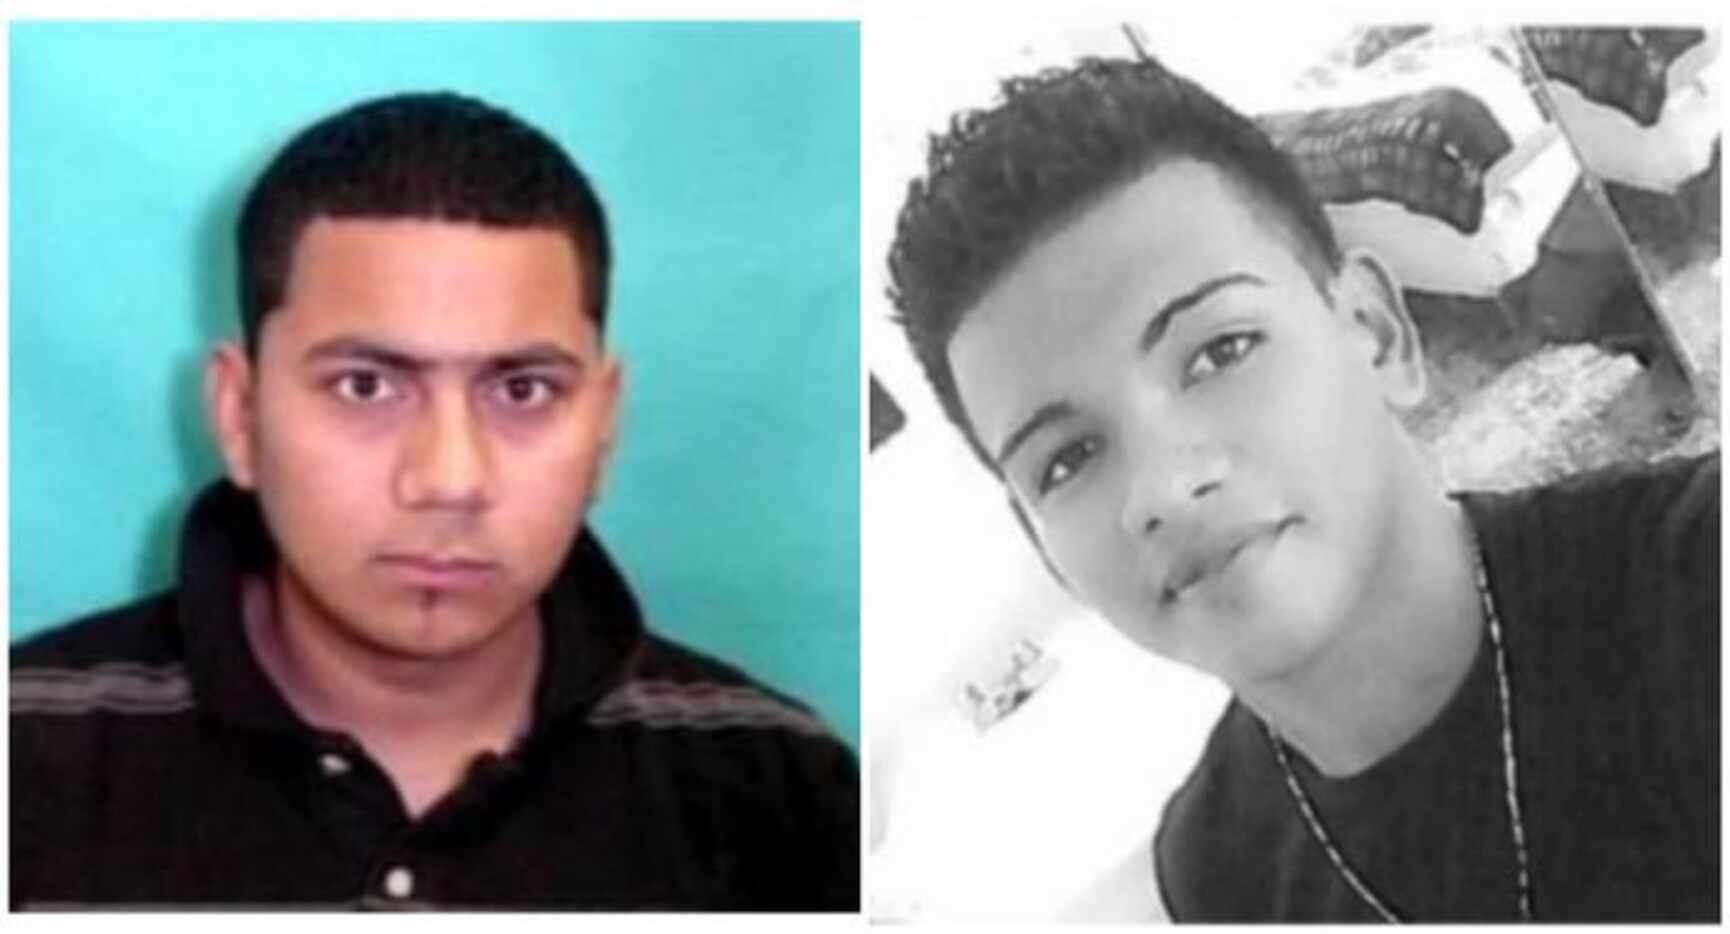 Jose Reynaldo Zamora-Banegas (left) was arrested and Jose Armando Nunez-Zamora is sought in...